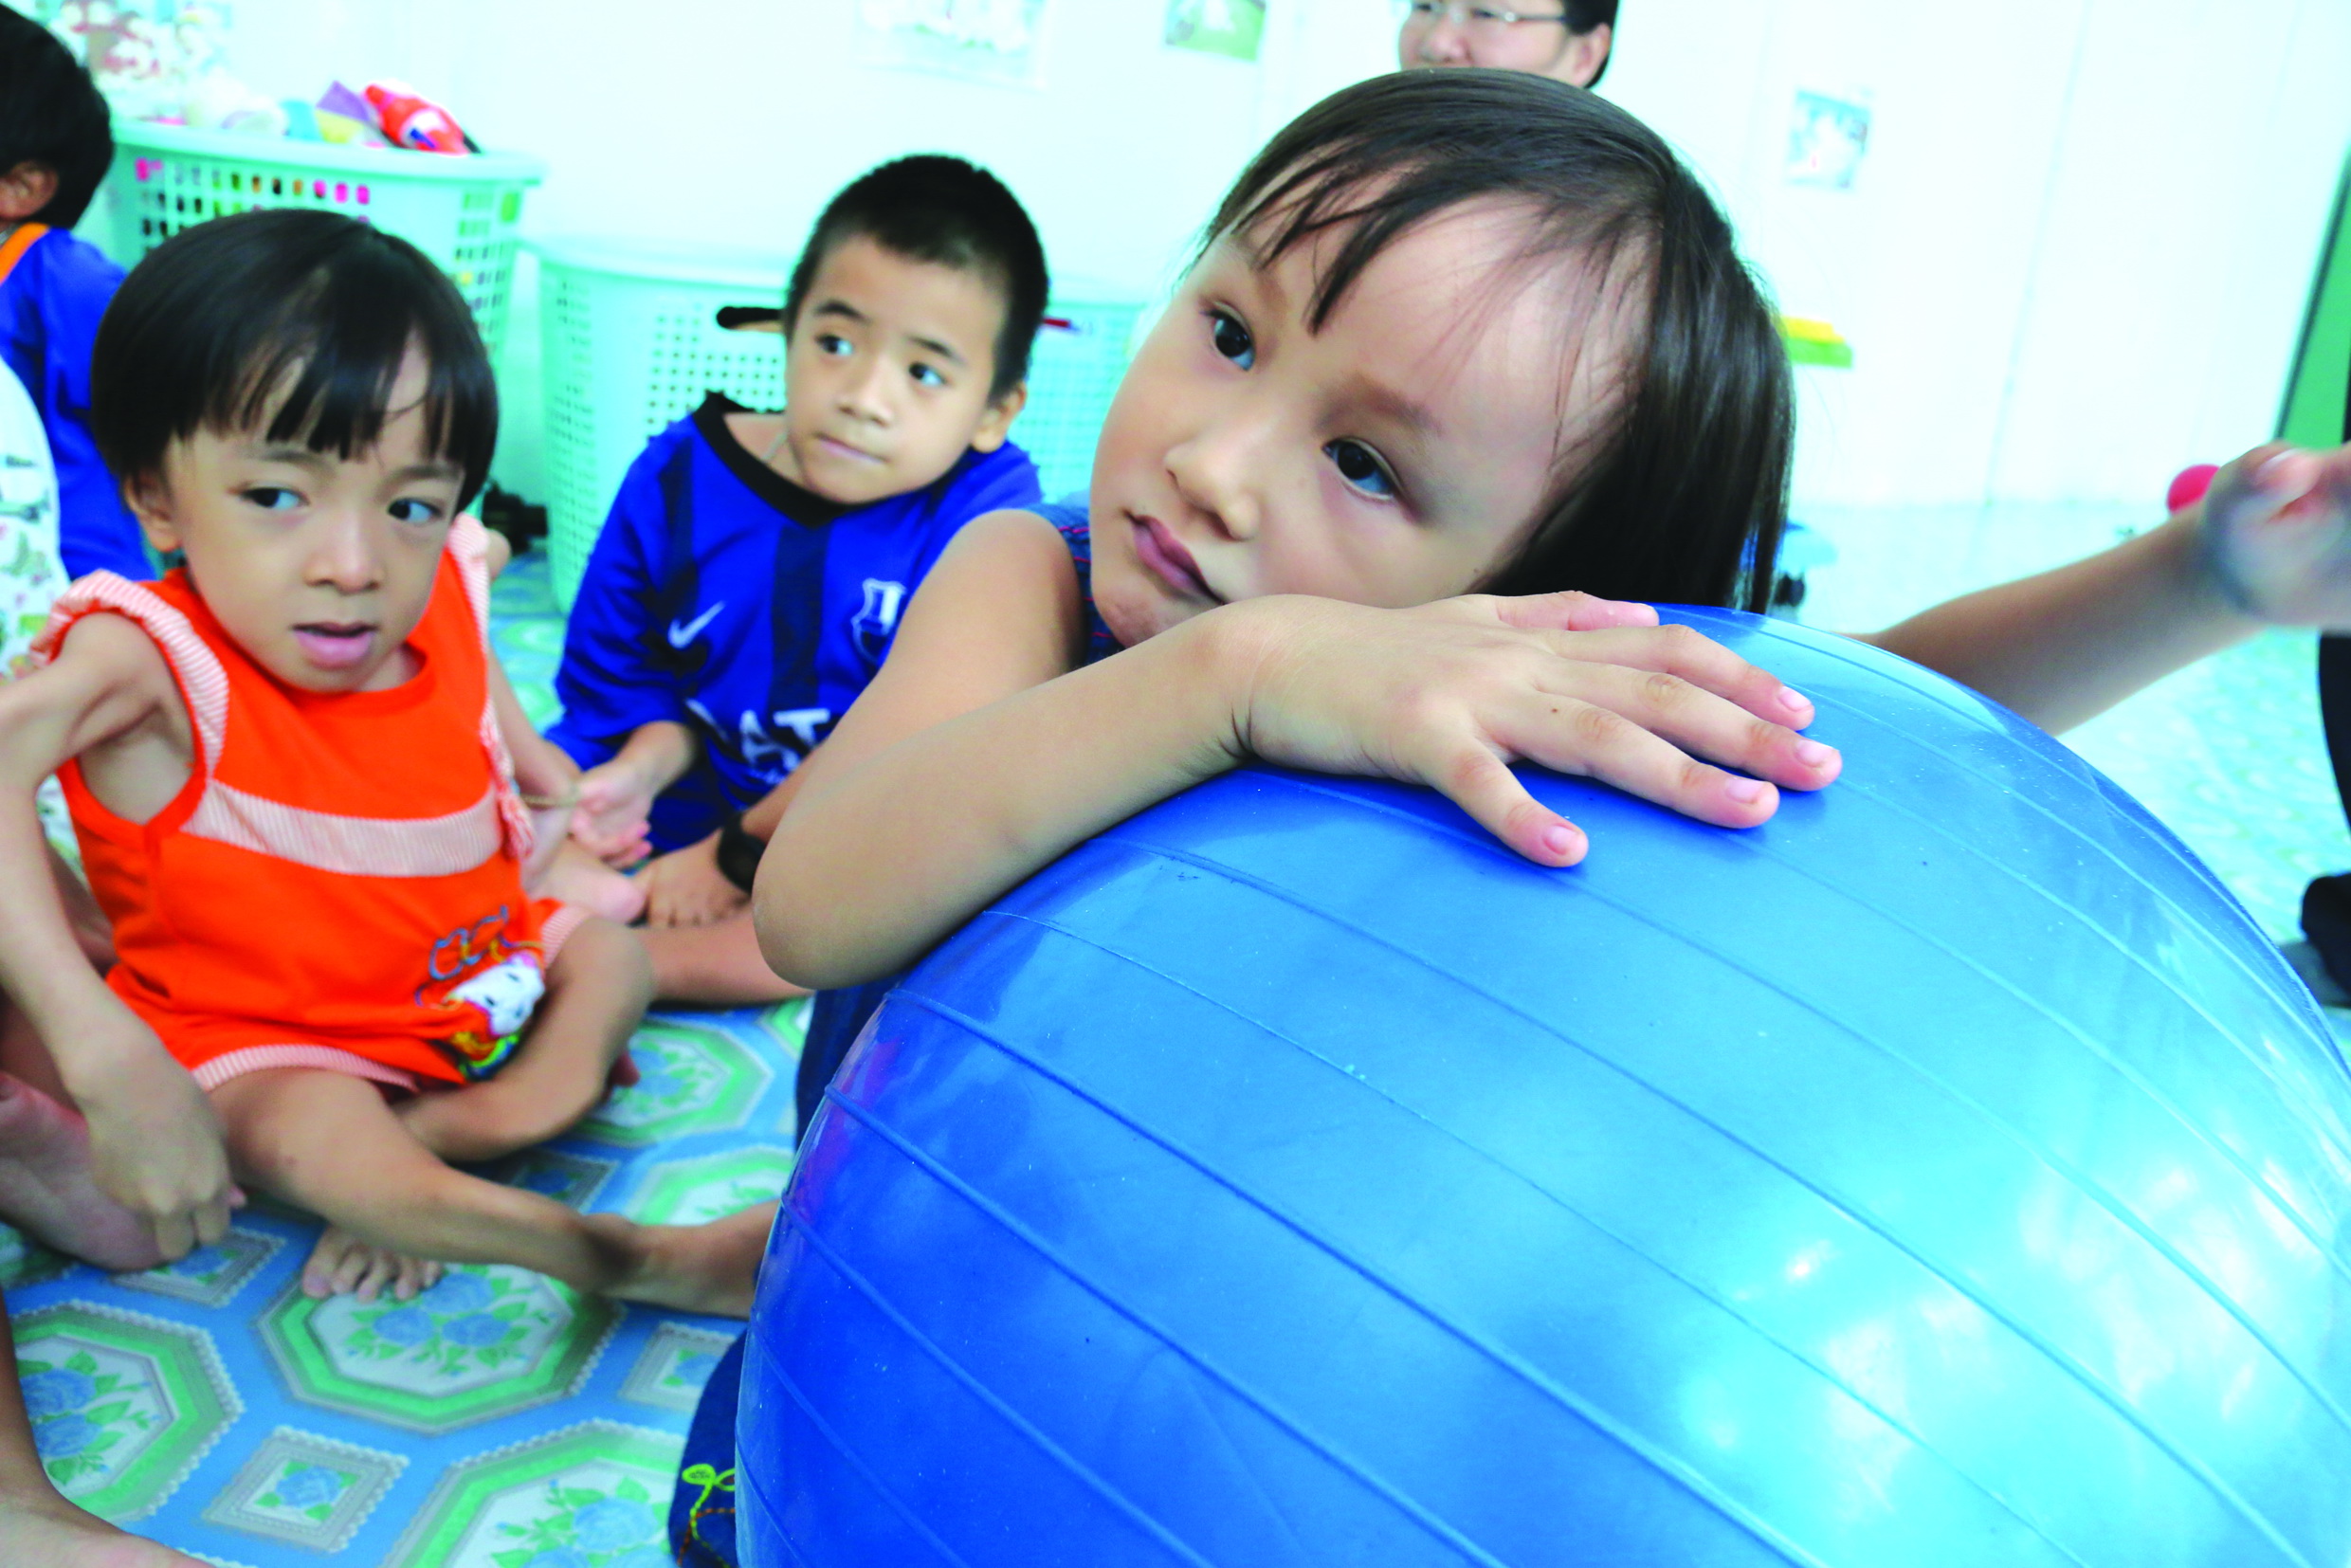 New treatment brings hopes to Vietnam brittle bone child patients (photos)